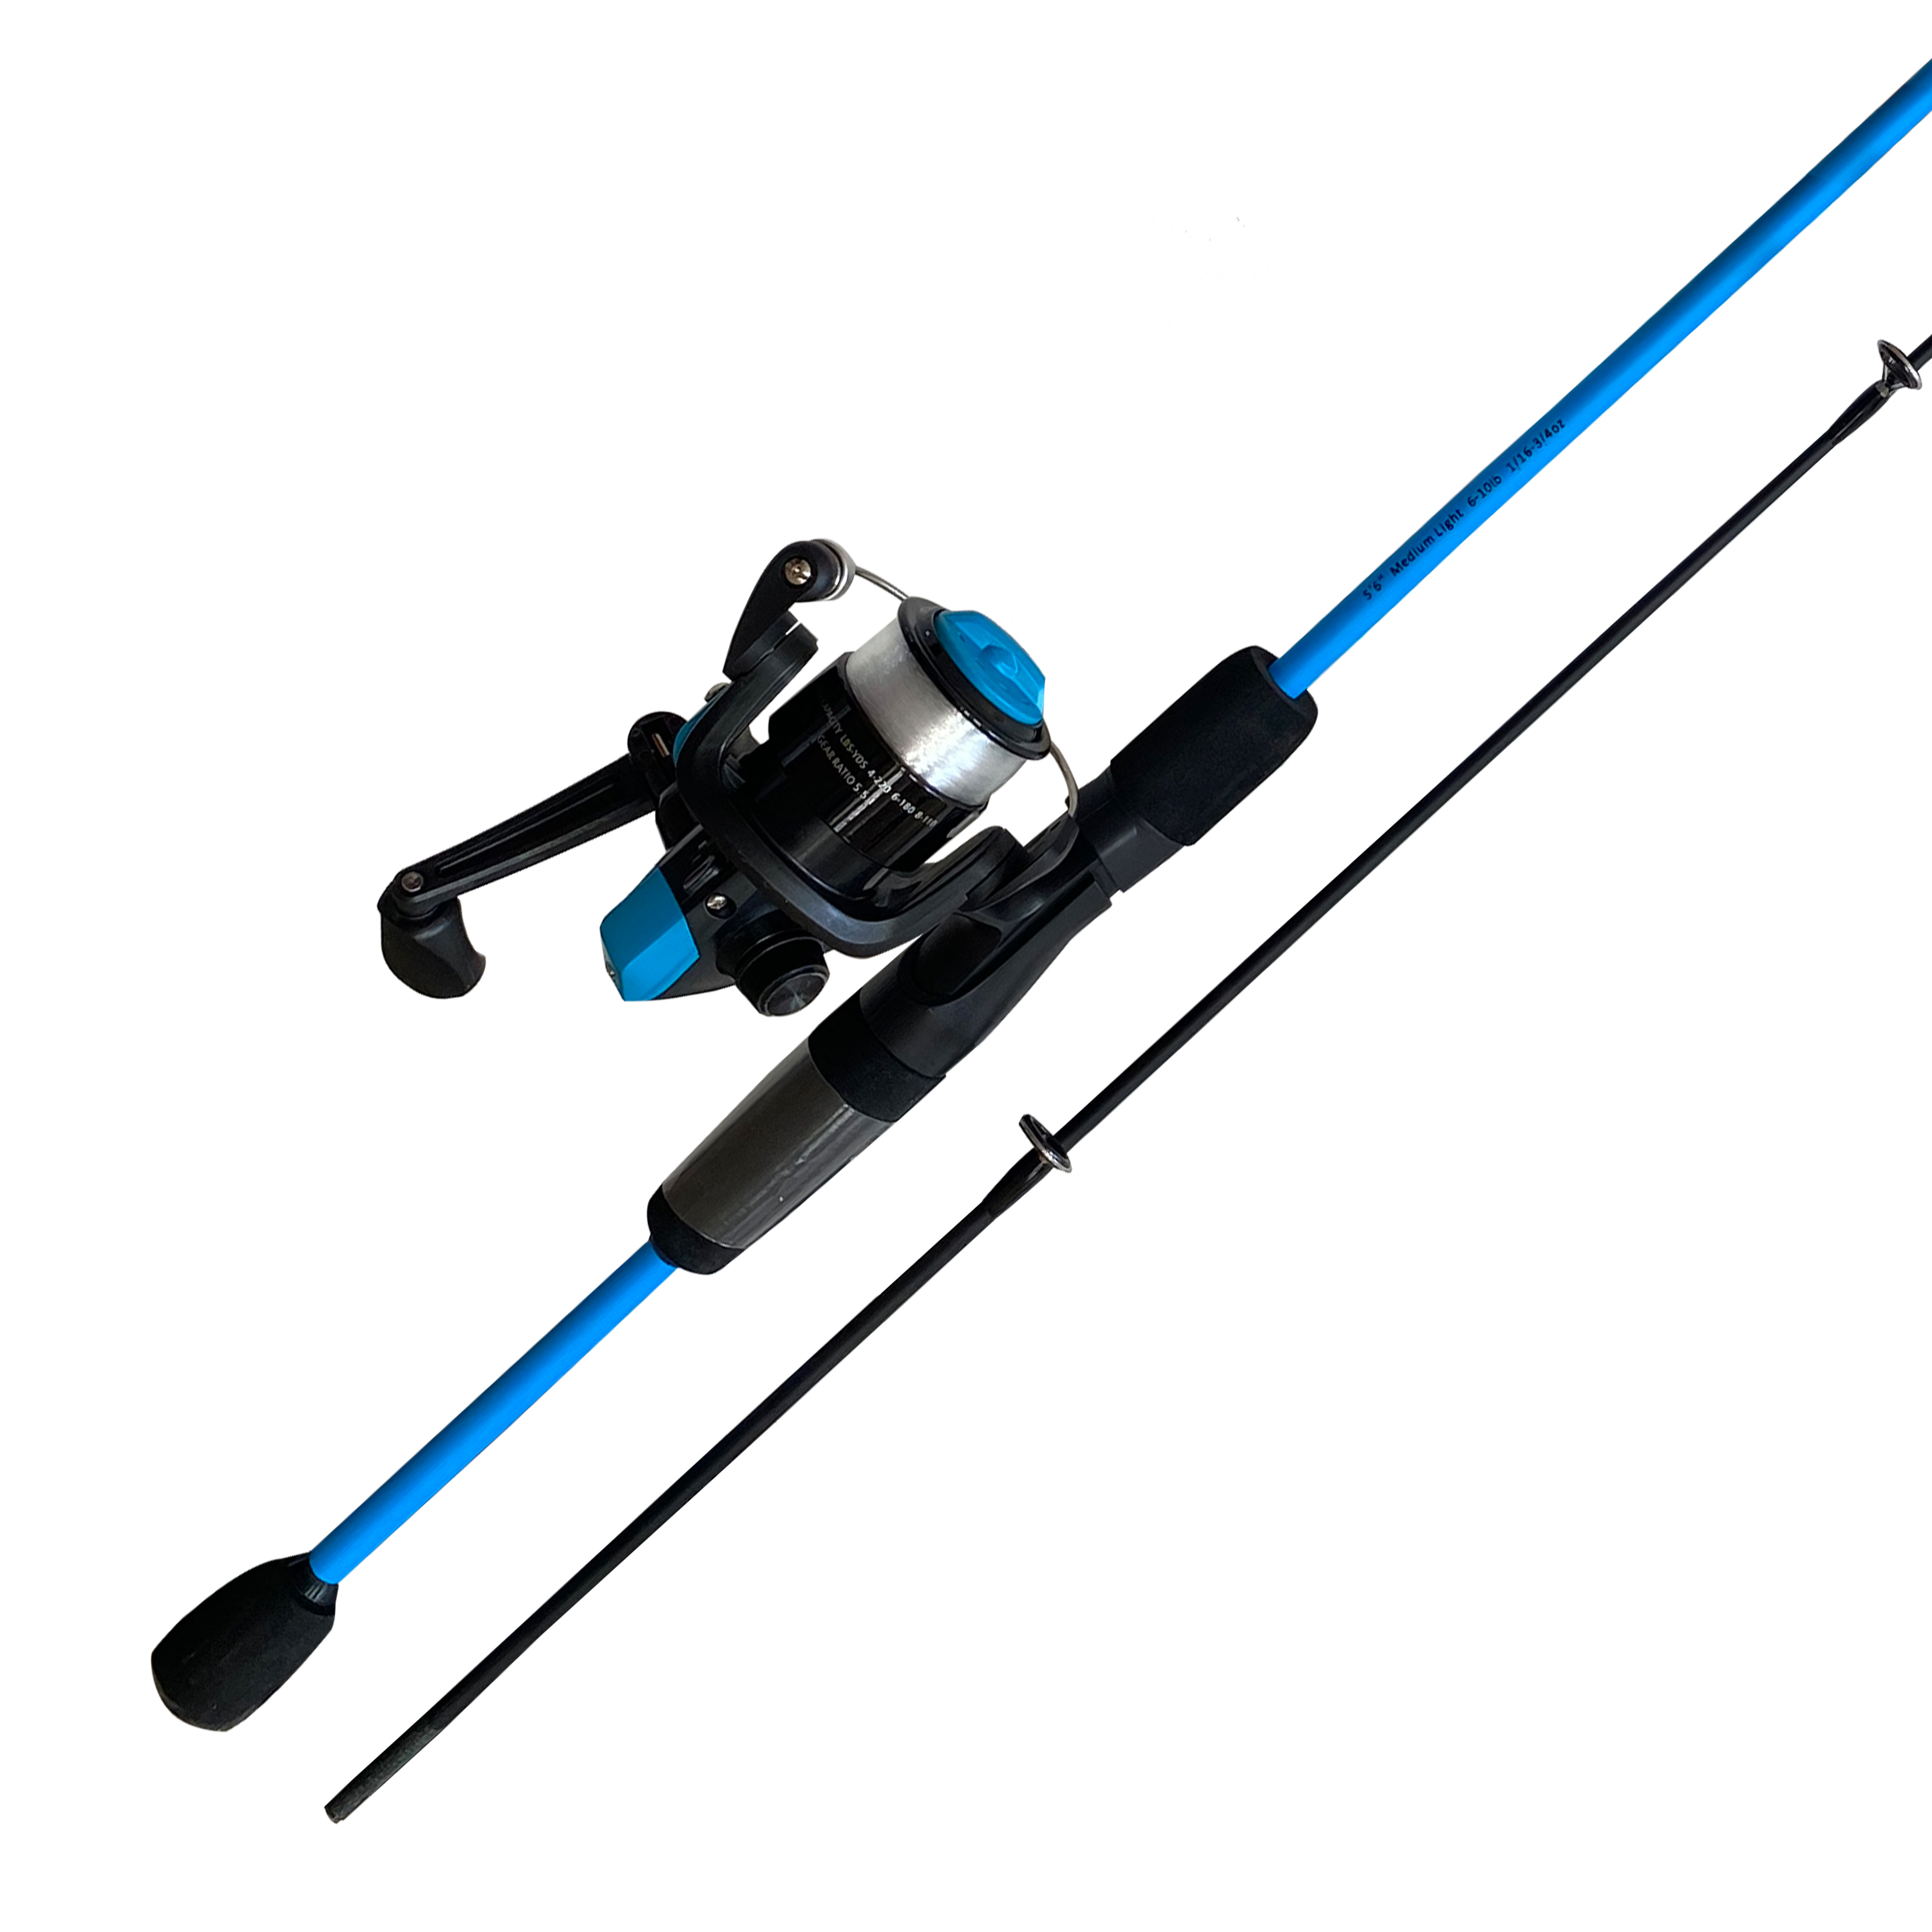 Ozark Trail Wayfarer Spinning Fishing Rod and Reel Combo, Blue - image 4 of 5